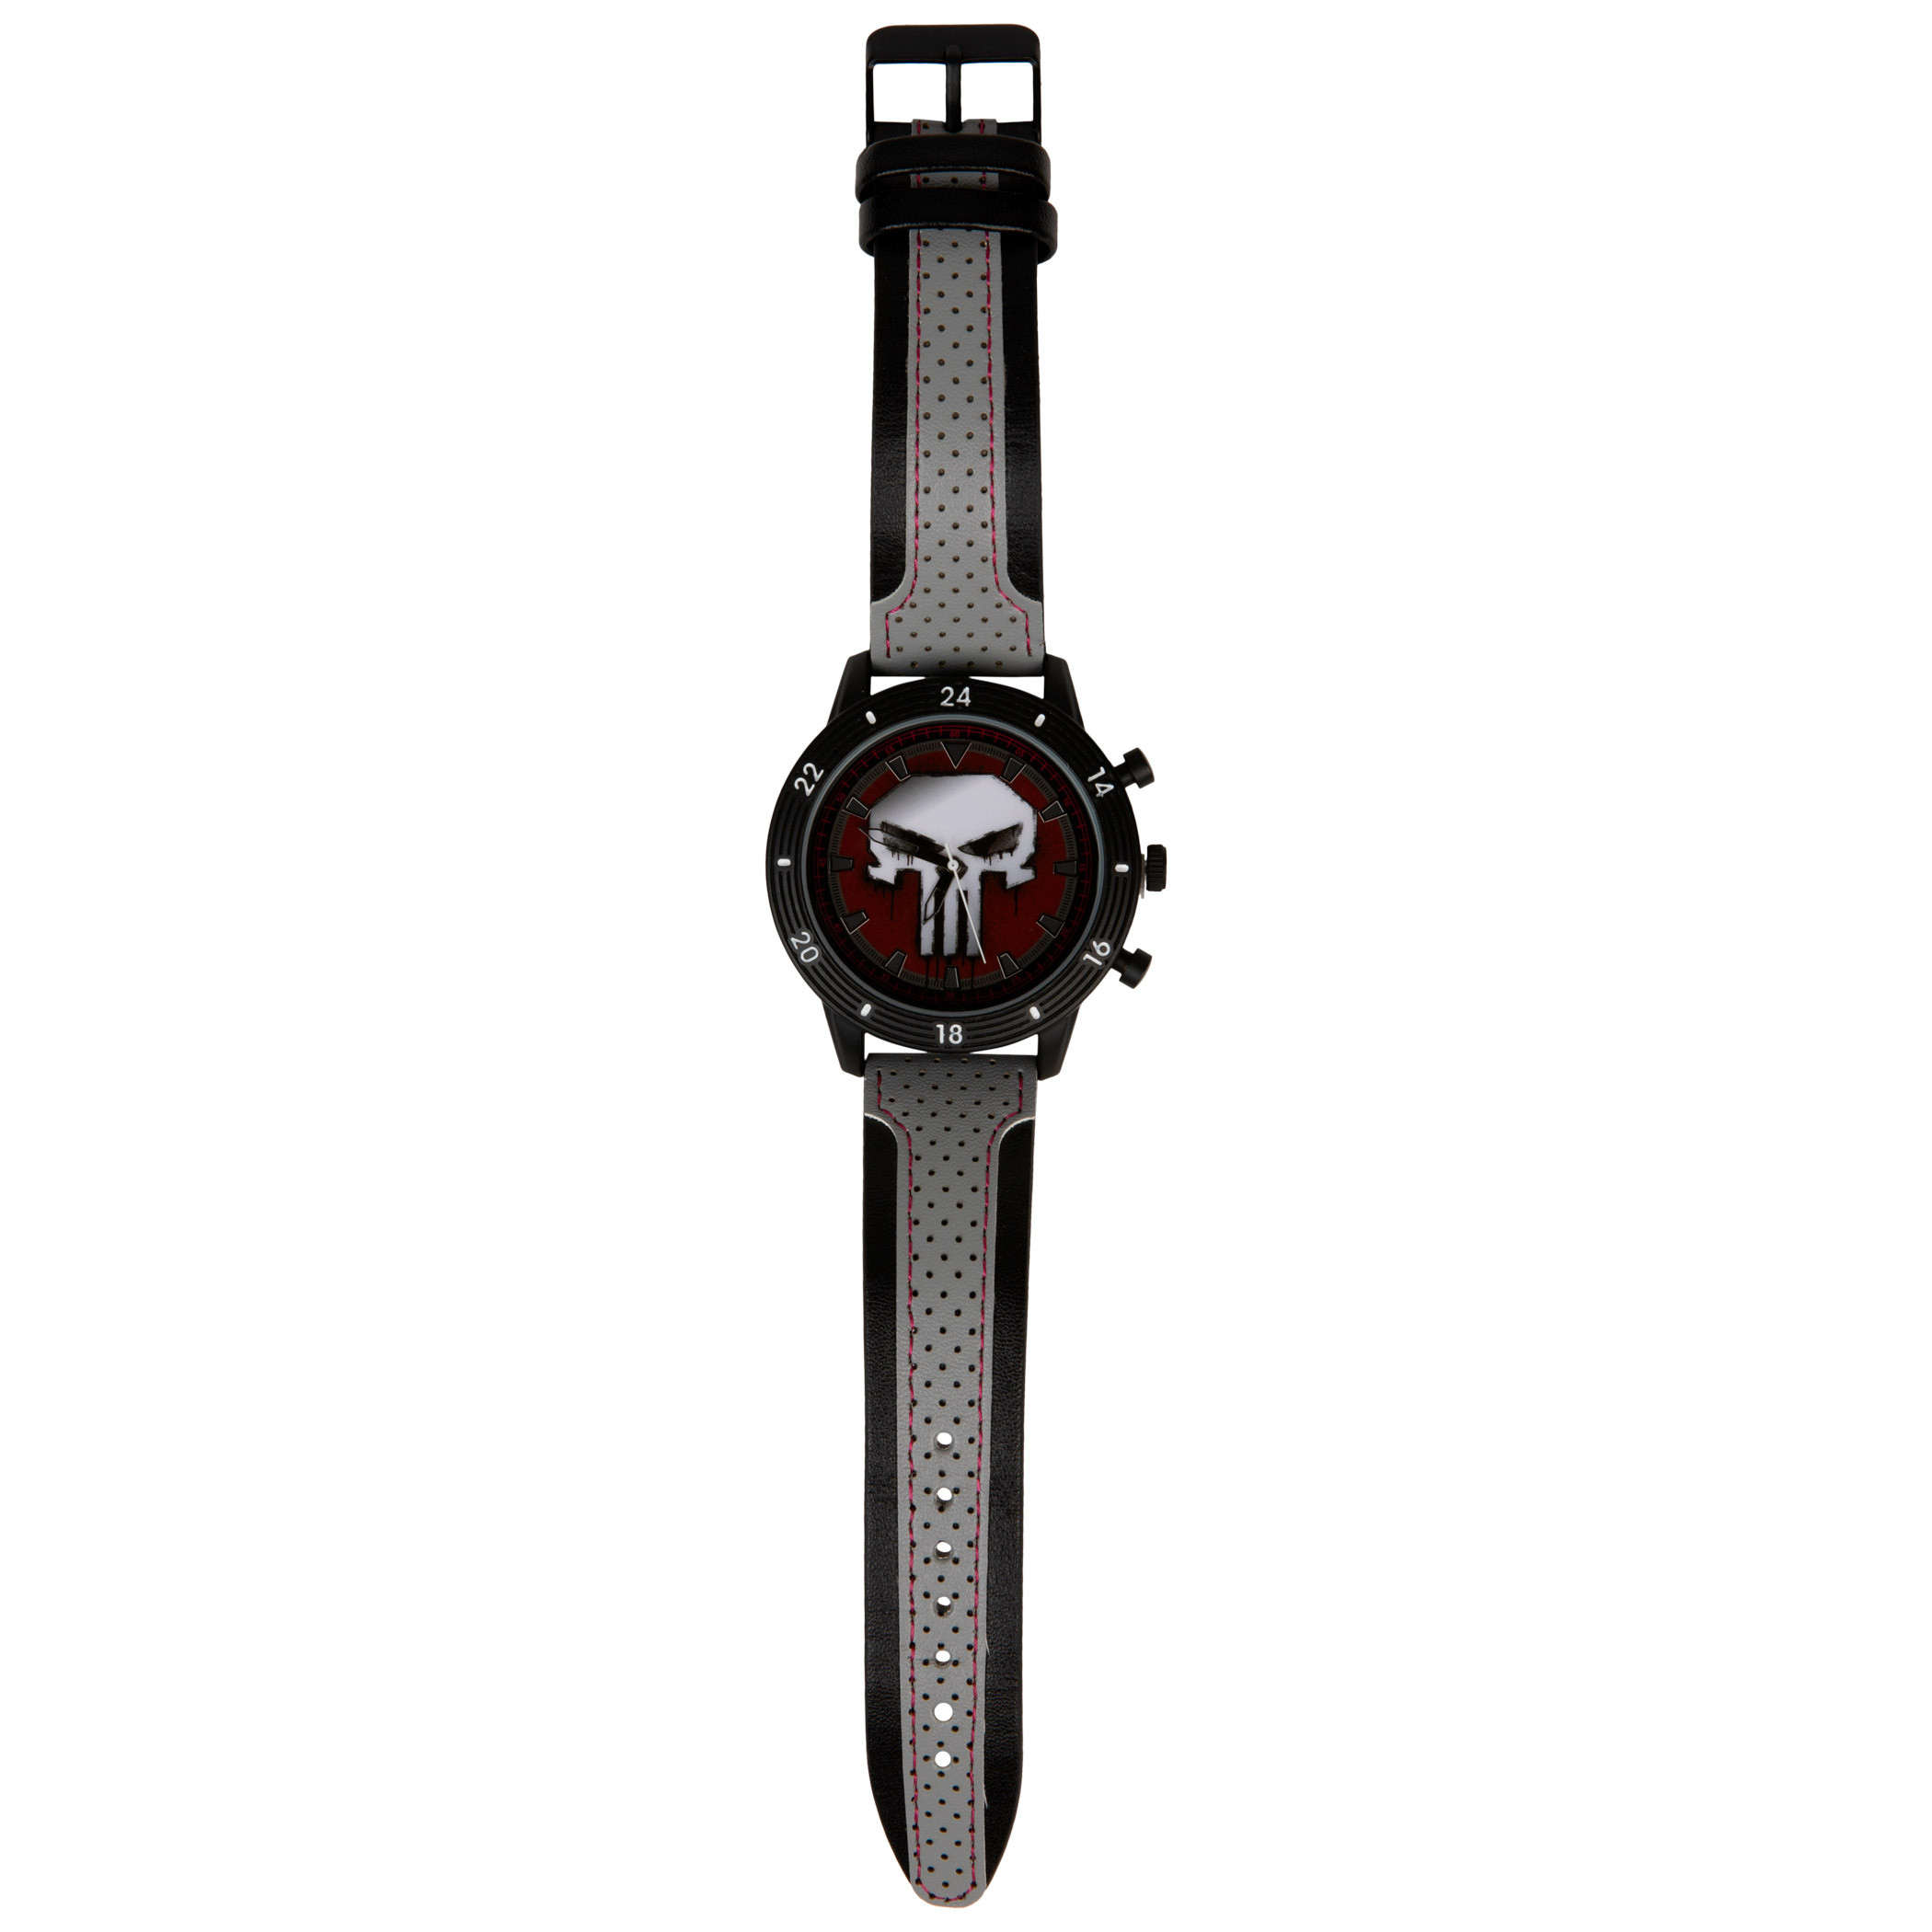 The Punisher Marvel Symbol Watch